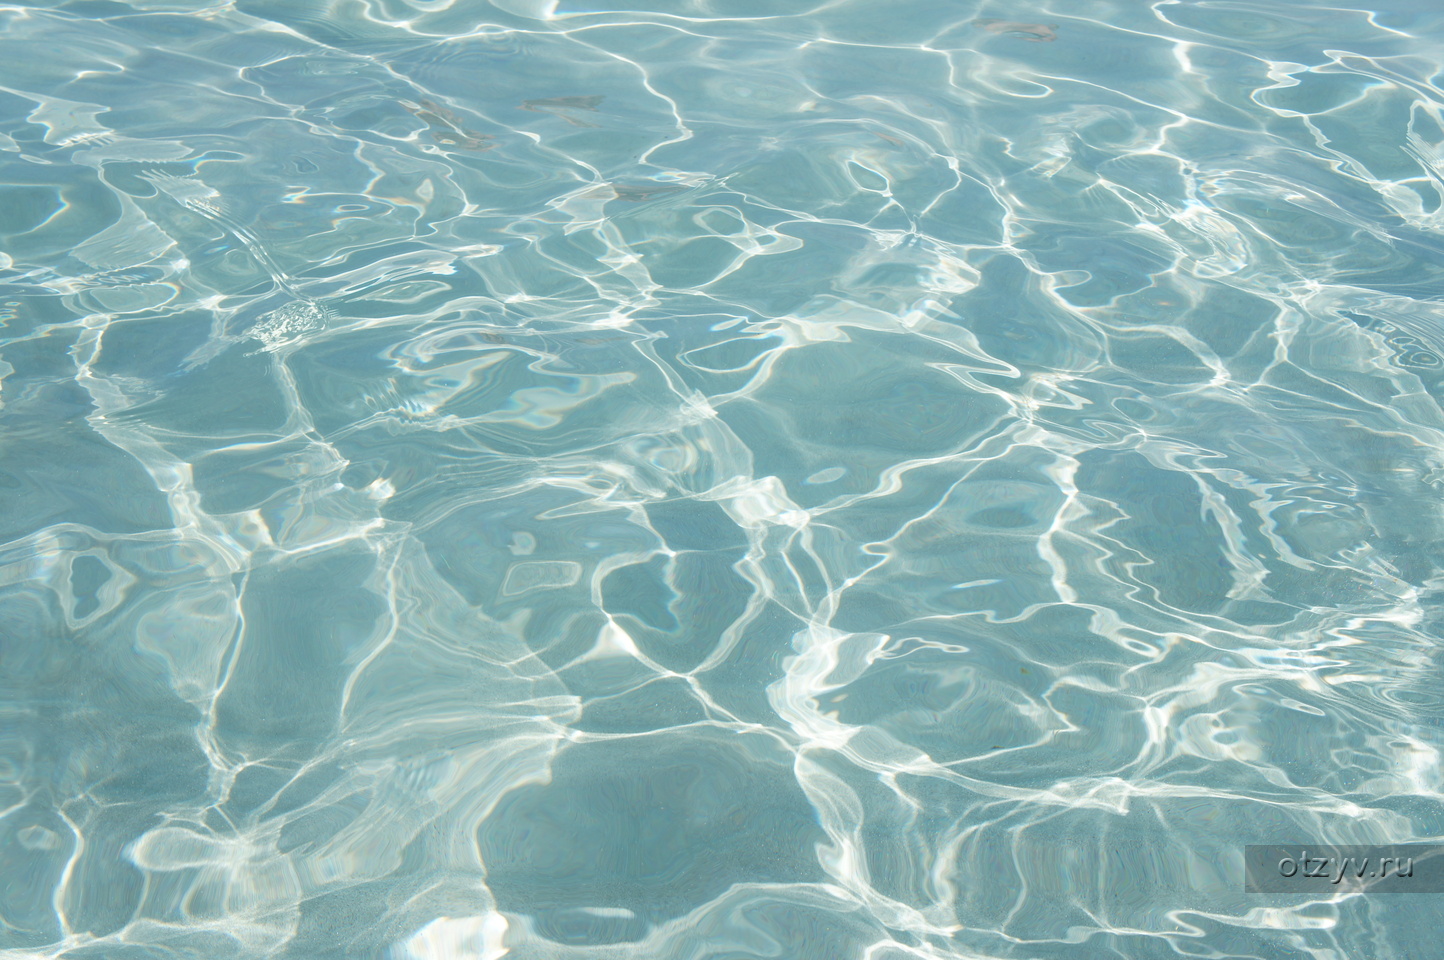 Ковид вода. Вода сверху. Океан вид сверху. Текстура воды. Прозрачная вода.